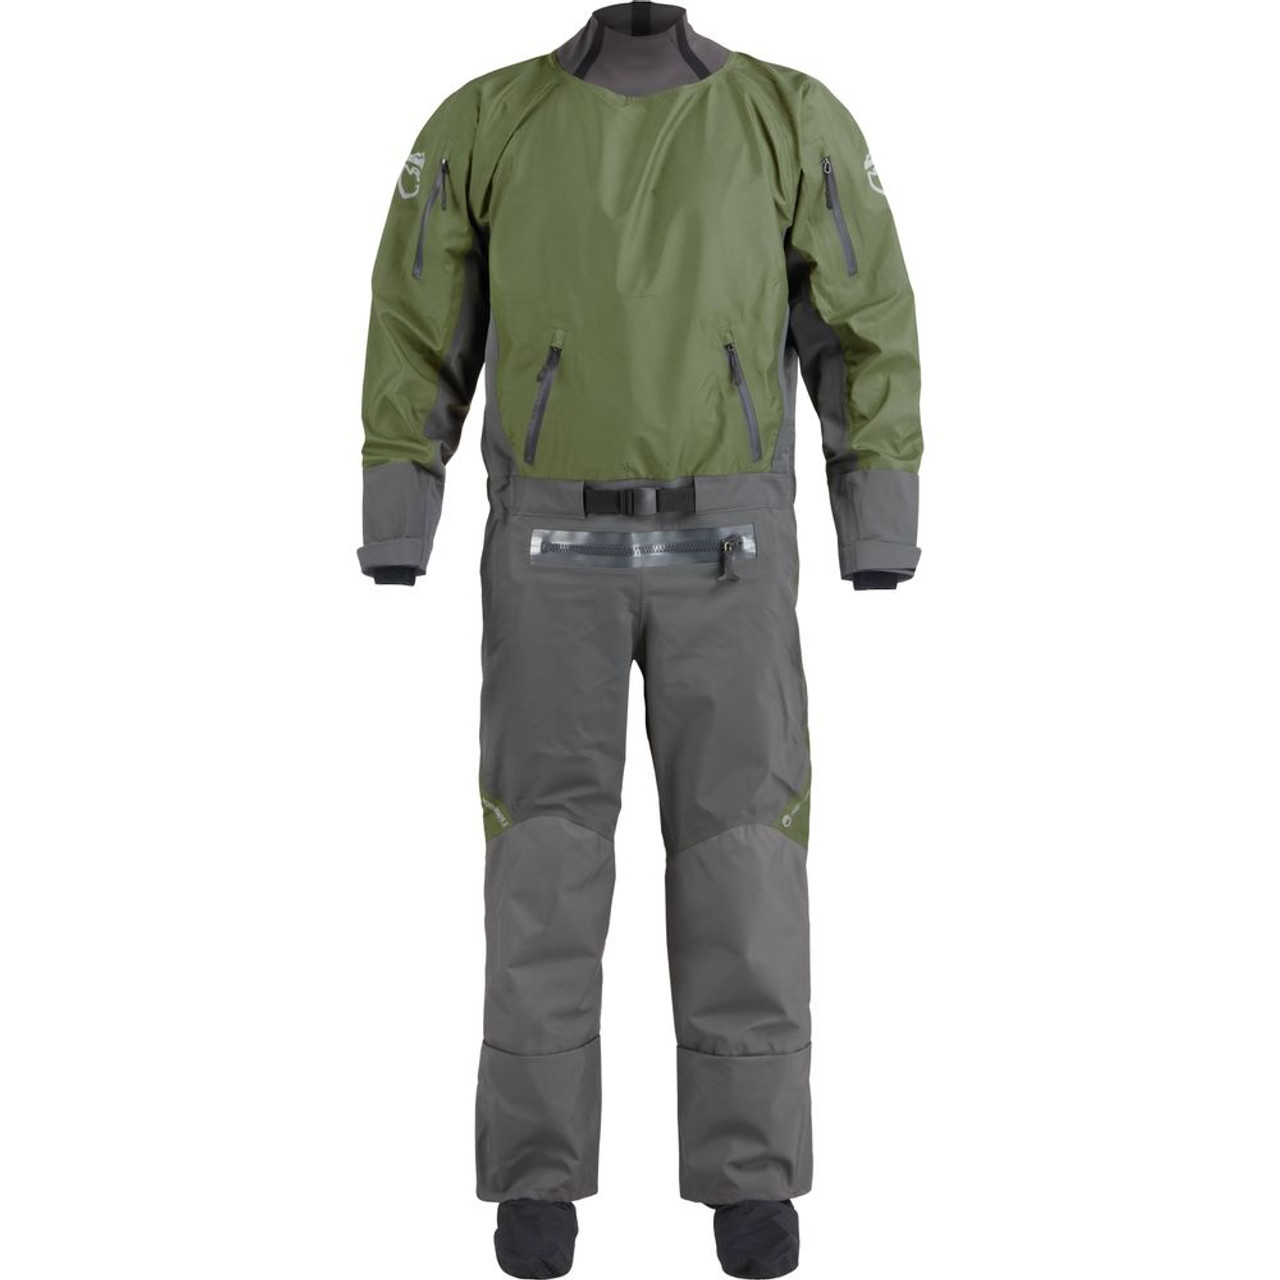 NRS Men's Spyn Fishing Dry Suit